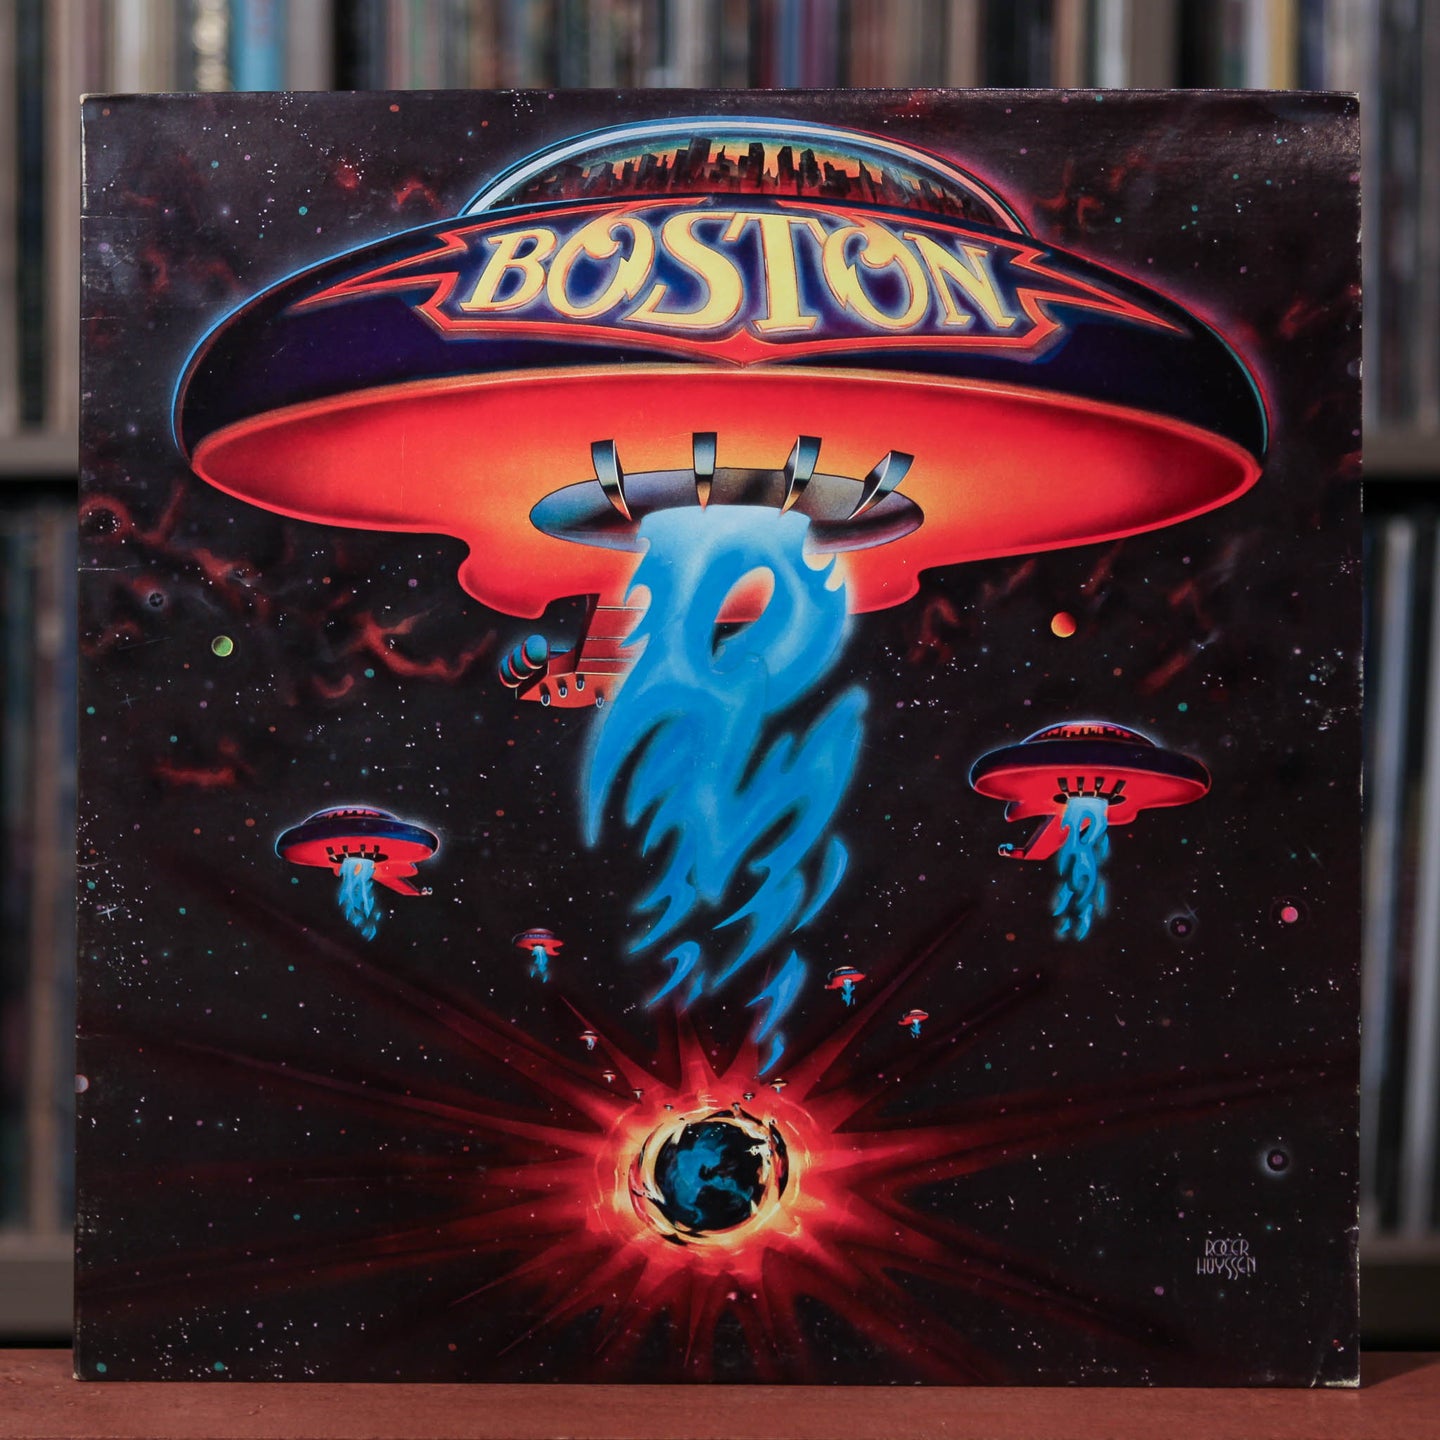 Boston - Self-Titled - 1976 Epic, VG+/VG+